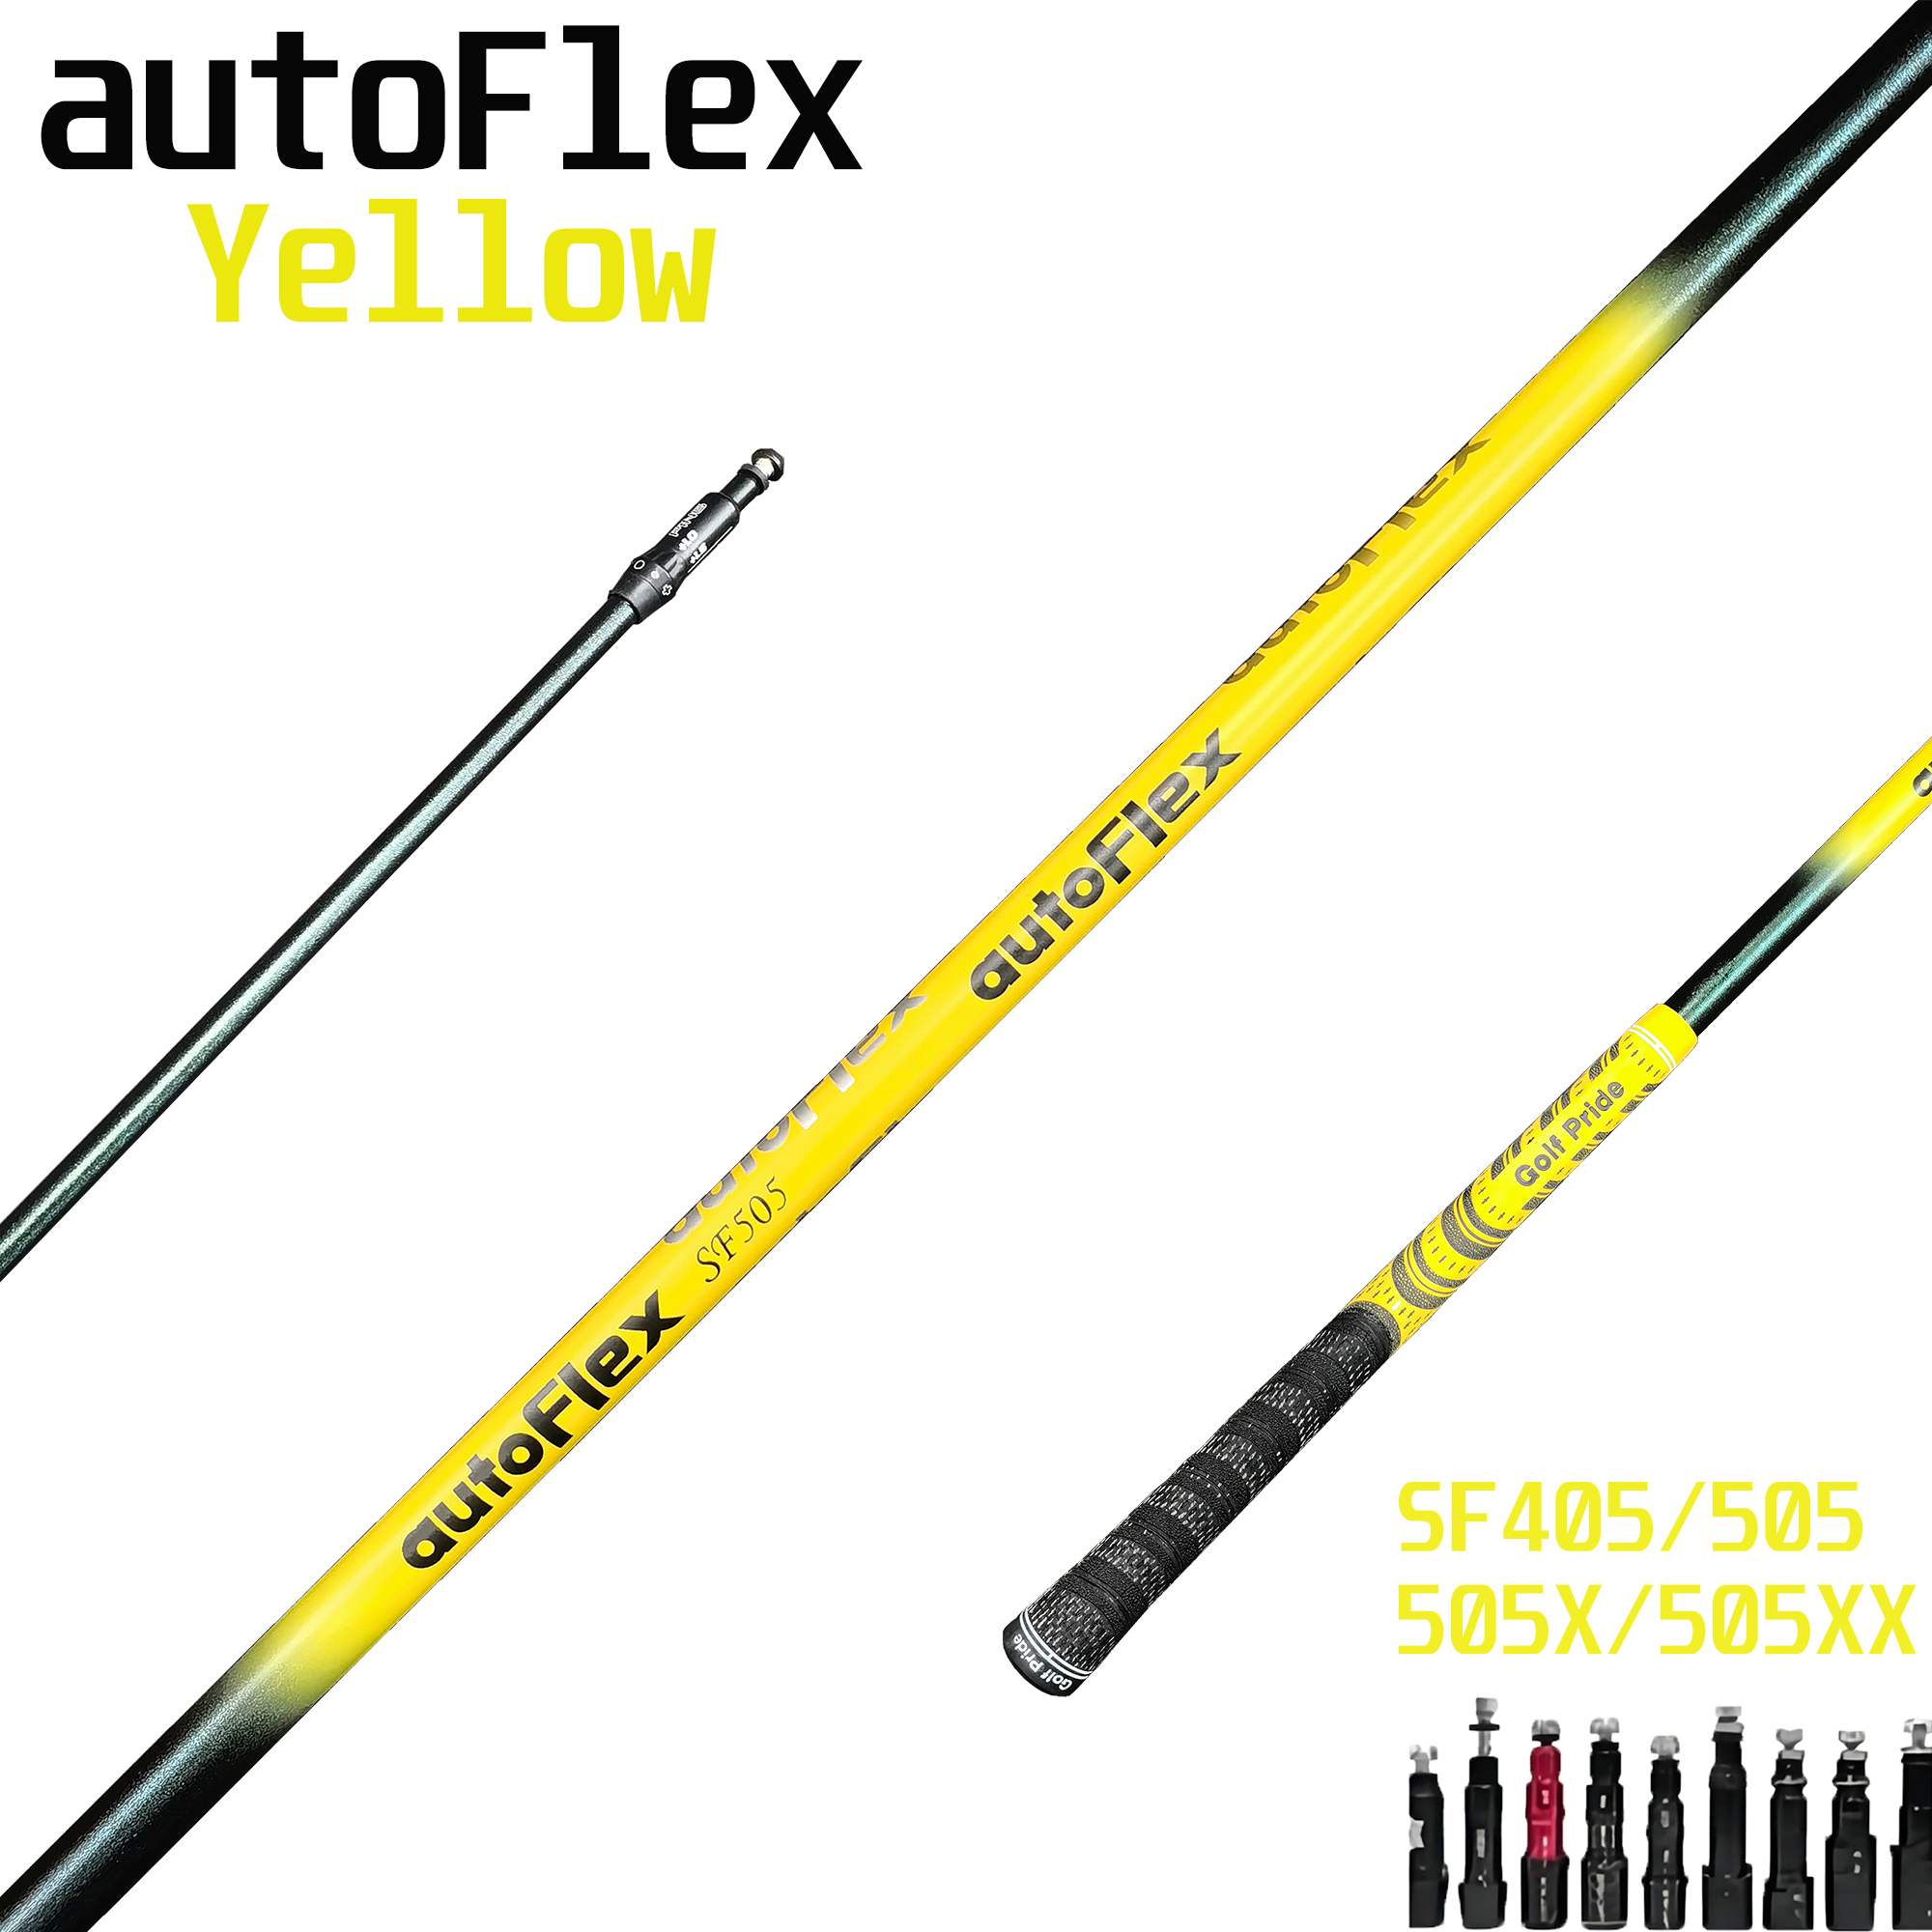 Autoflex Driver Golf Shaft, Yellow or Blue Flex Graphite Club Shafts, Free Assembly Sleeve and Grip, New, SF505xx, SF505, SF505x